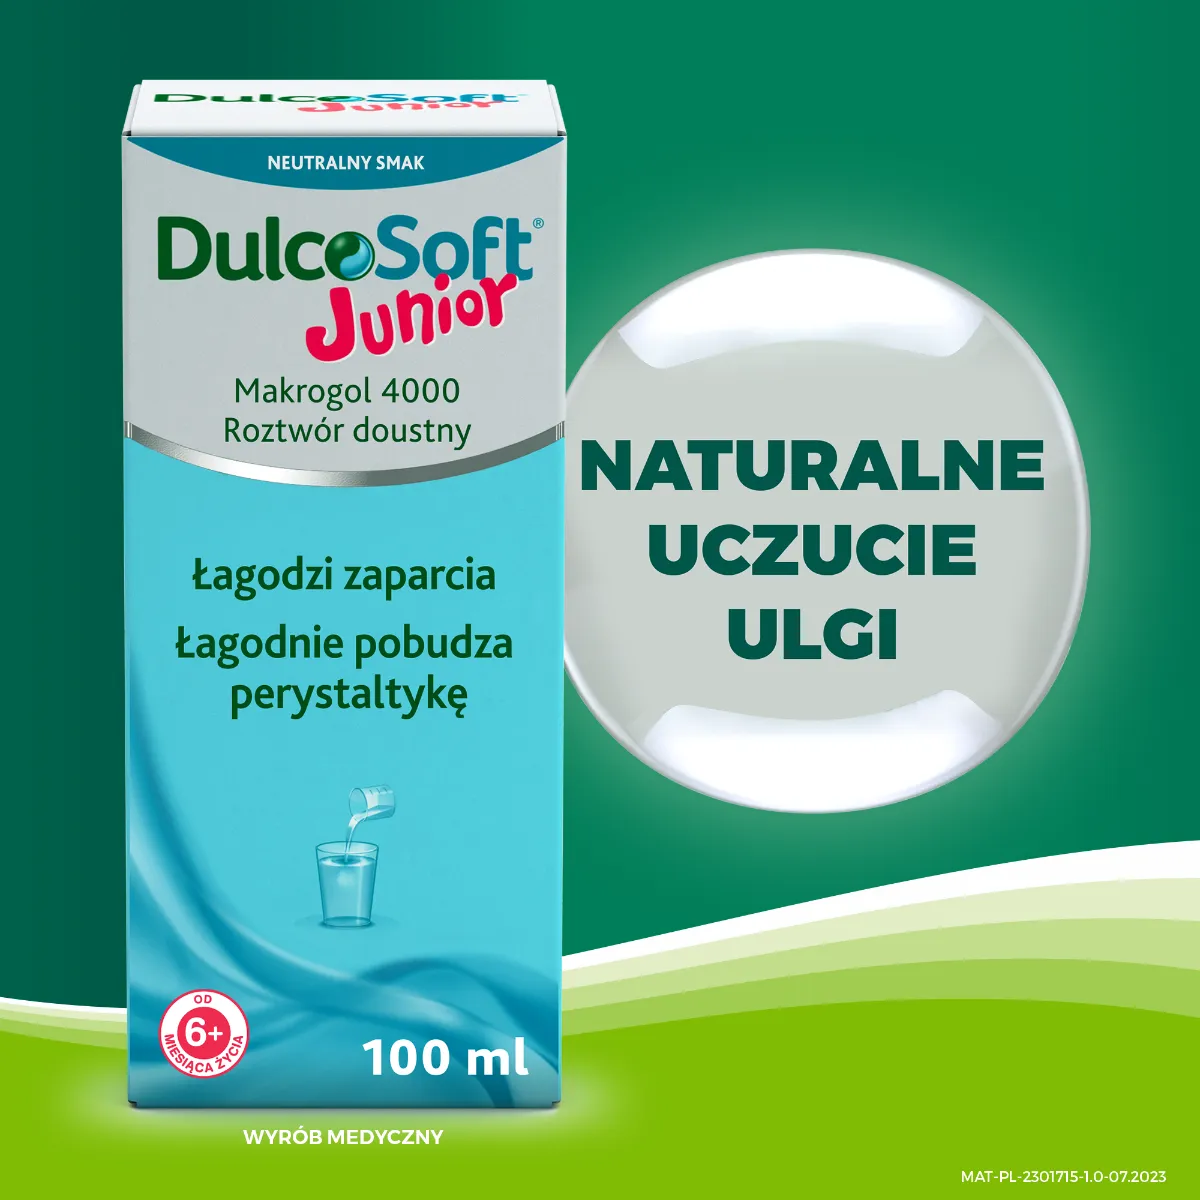 Dulcosoft Junior, smak neutralny, 100 ml 